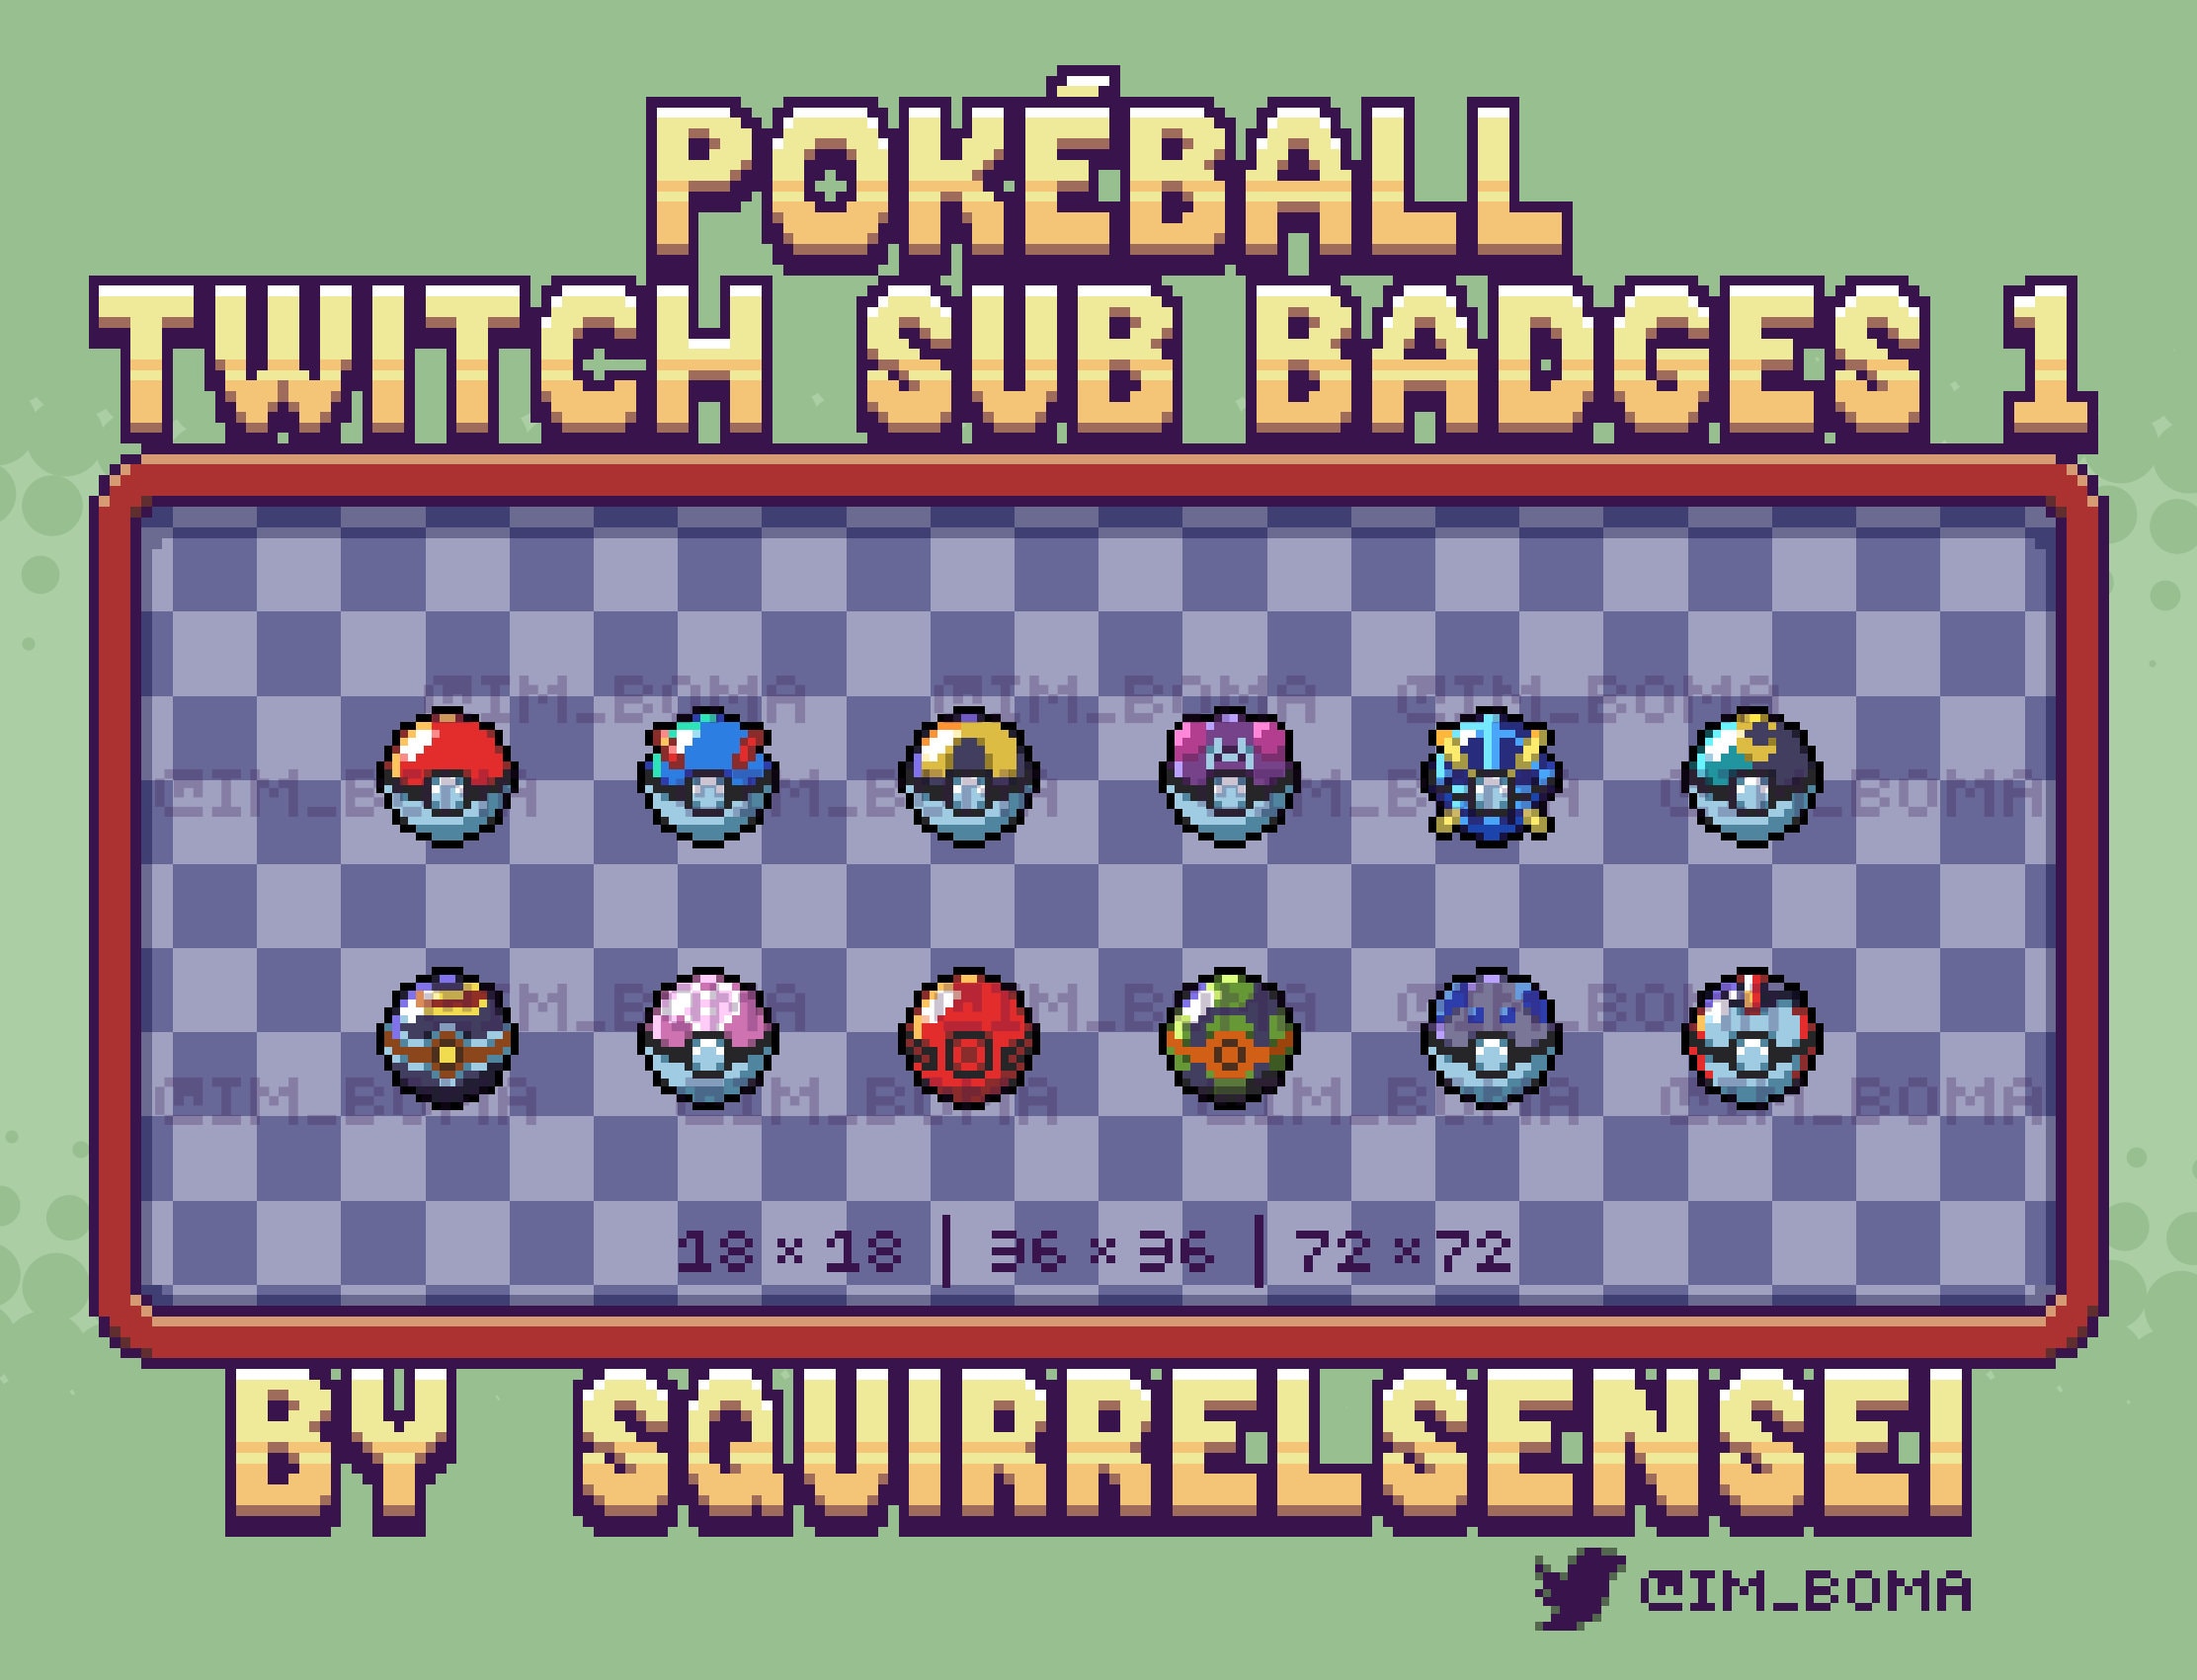 Poke Balls Twitch Sub / Cheer Badges Pixel Art - seaosaur's Ko-fi Shop